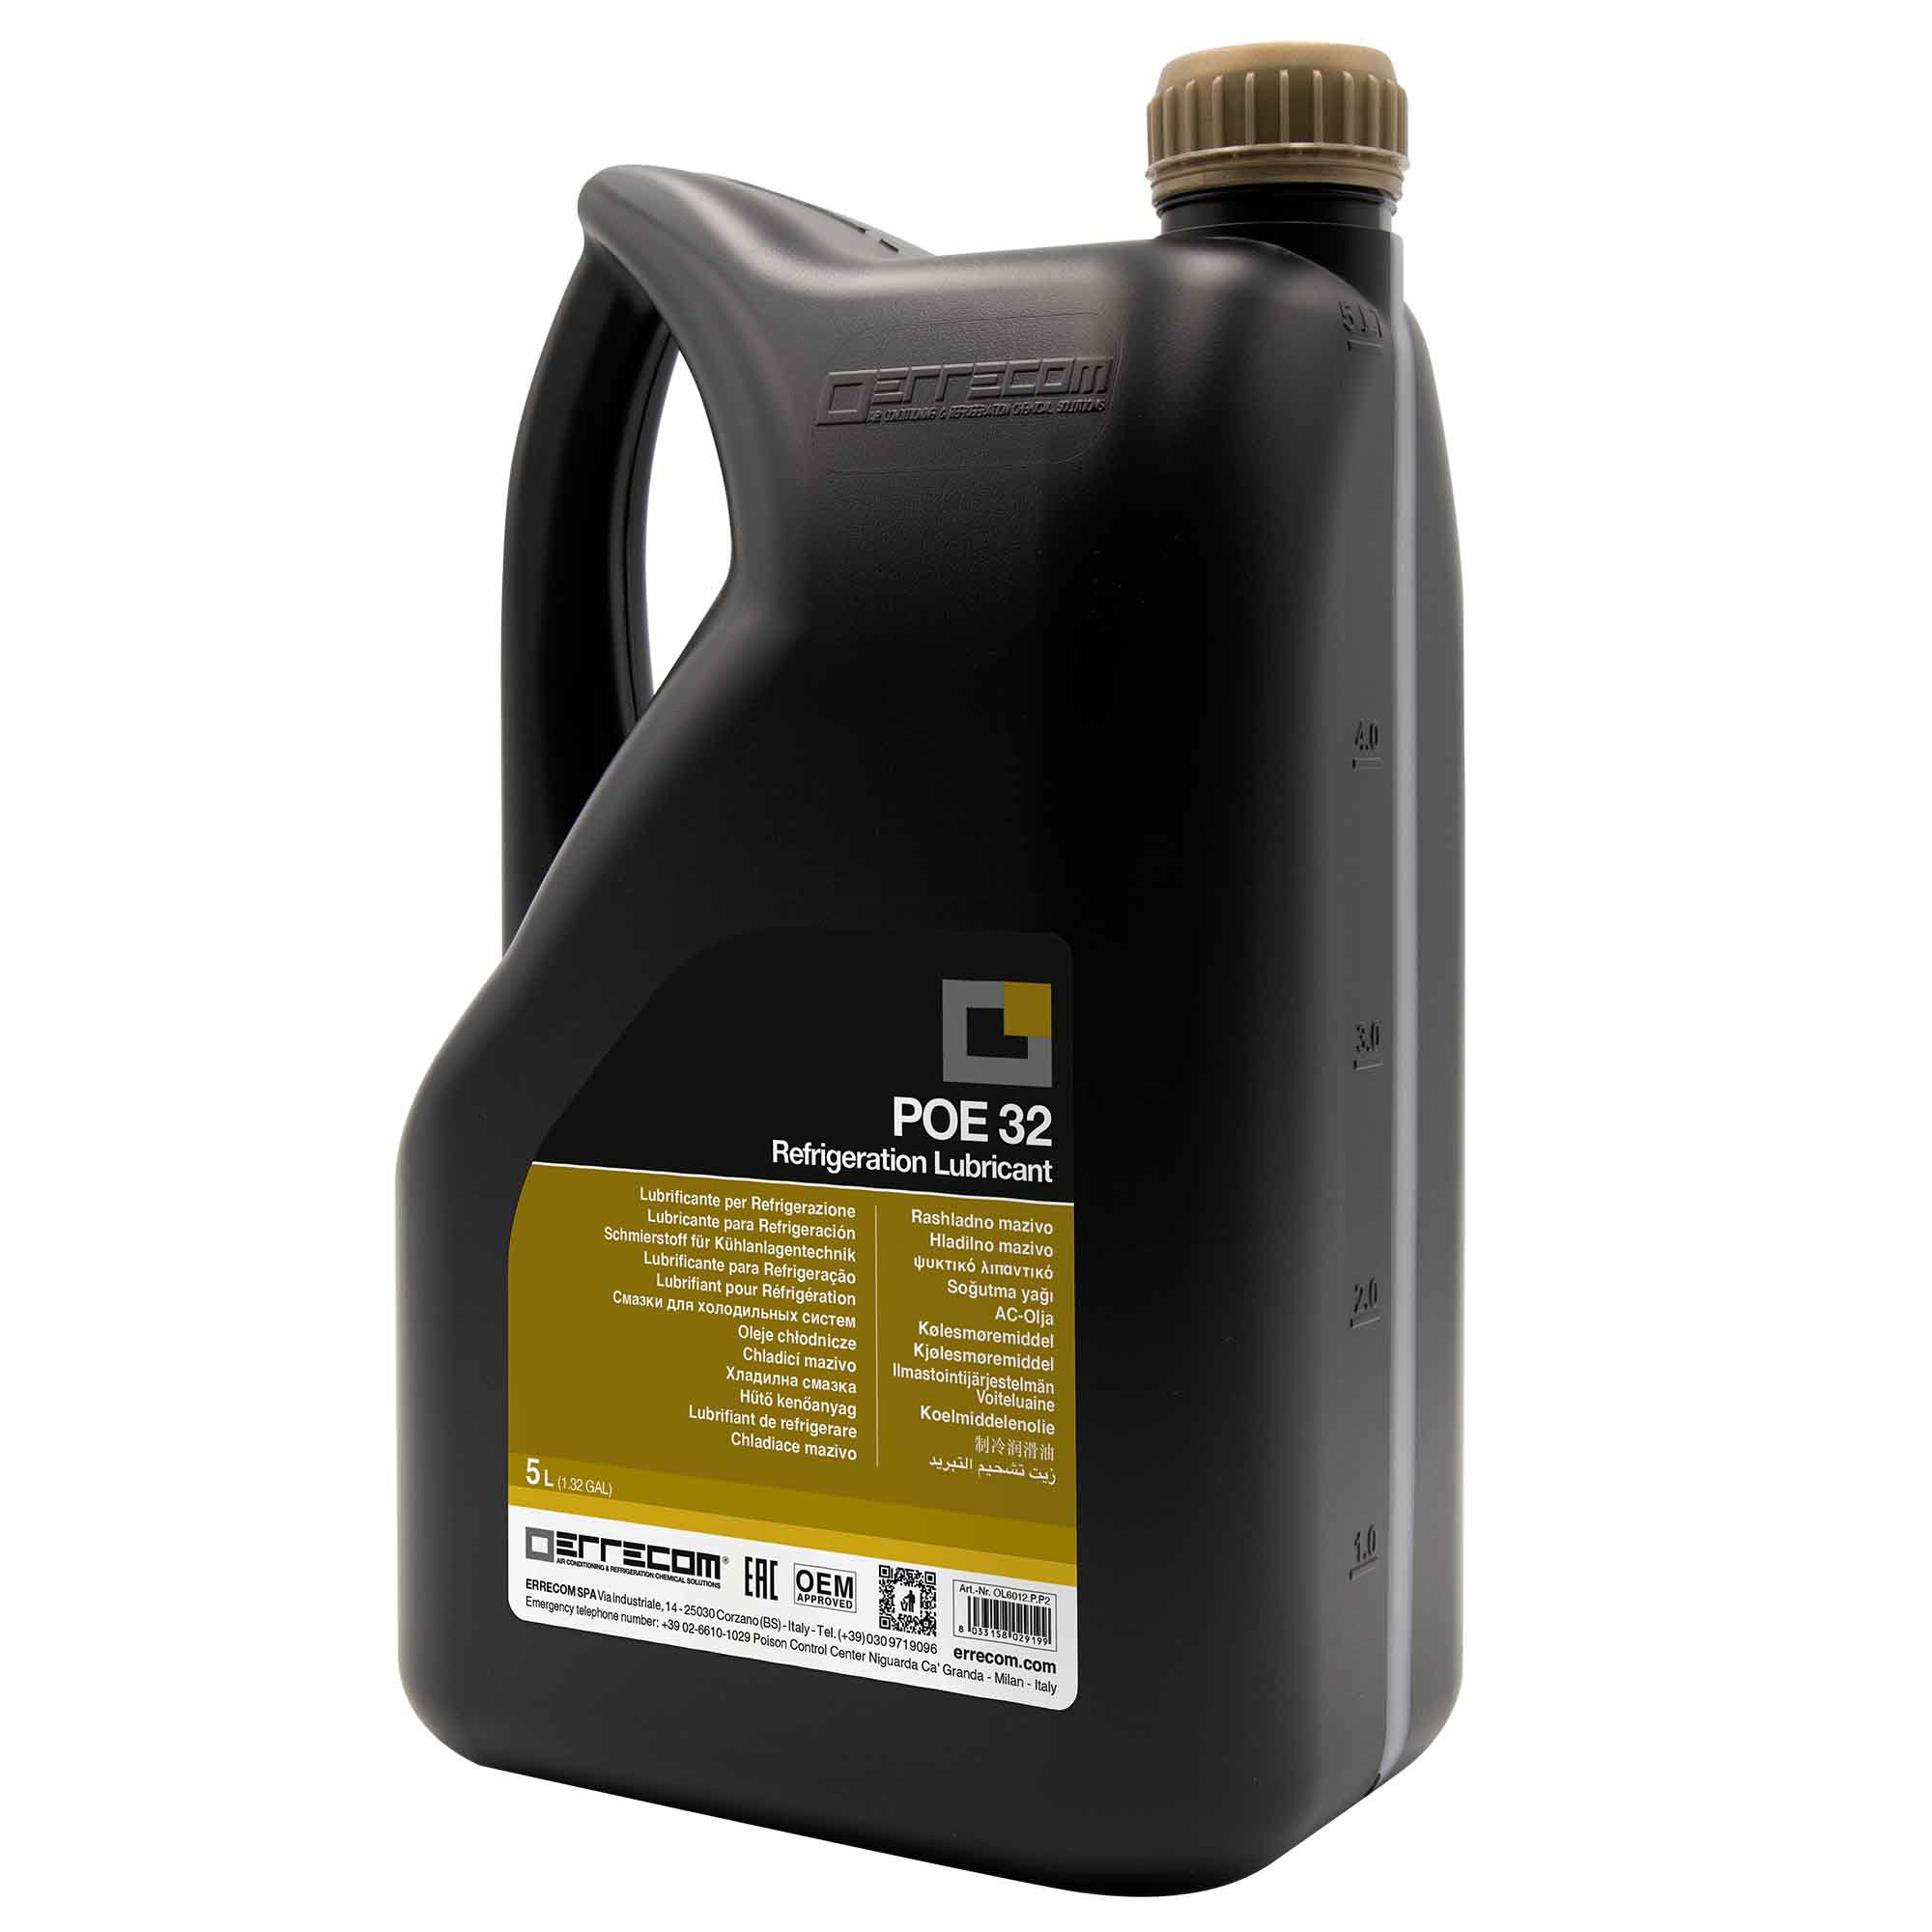 2 x R&AC Polyol Ester (POE) lubricant oil Errecom 32 - Plastic Tank 5 lt. - Package # 2 pcs. (total 10 liters)